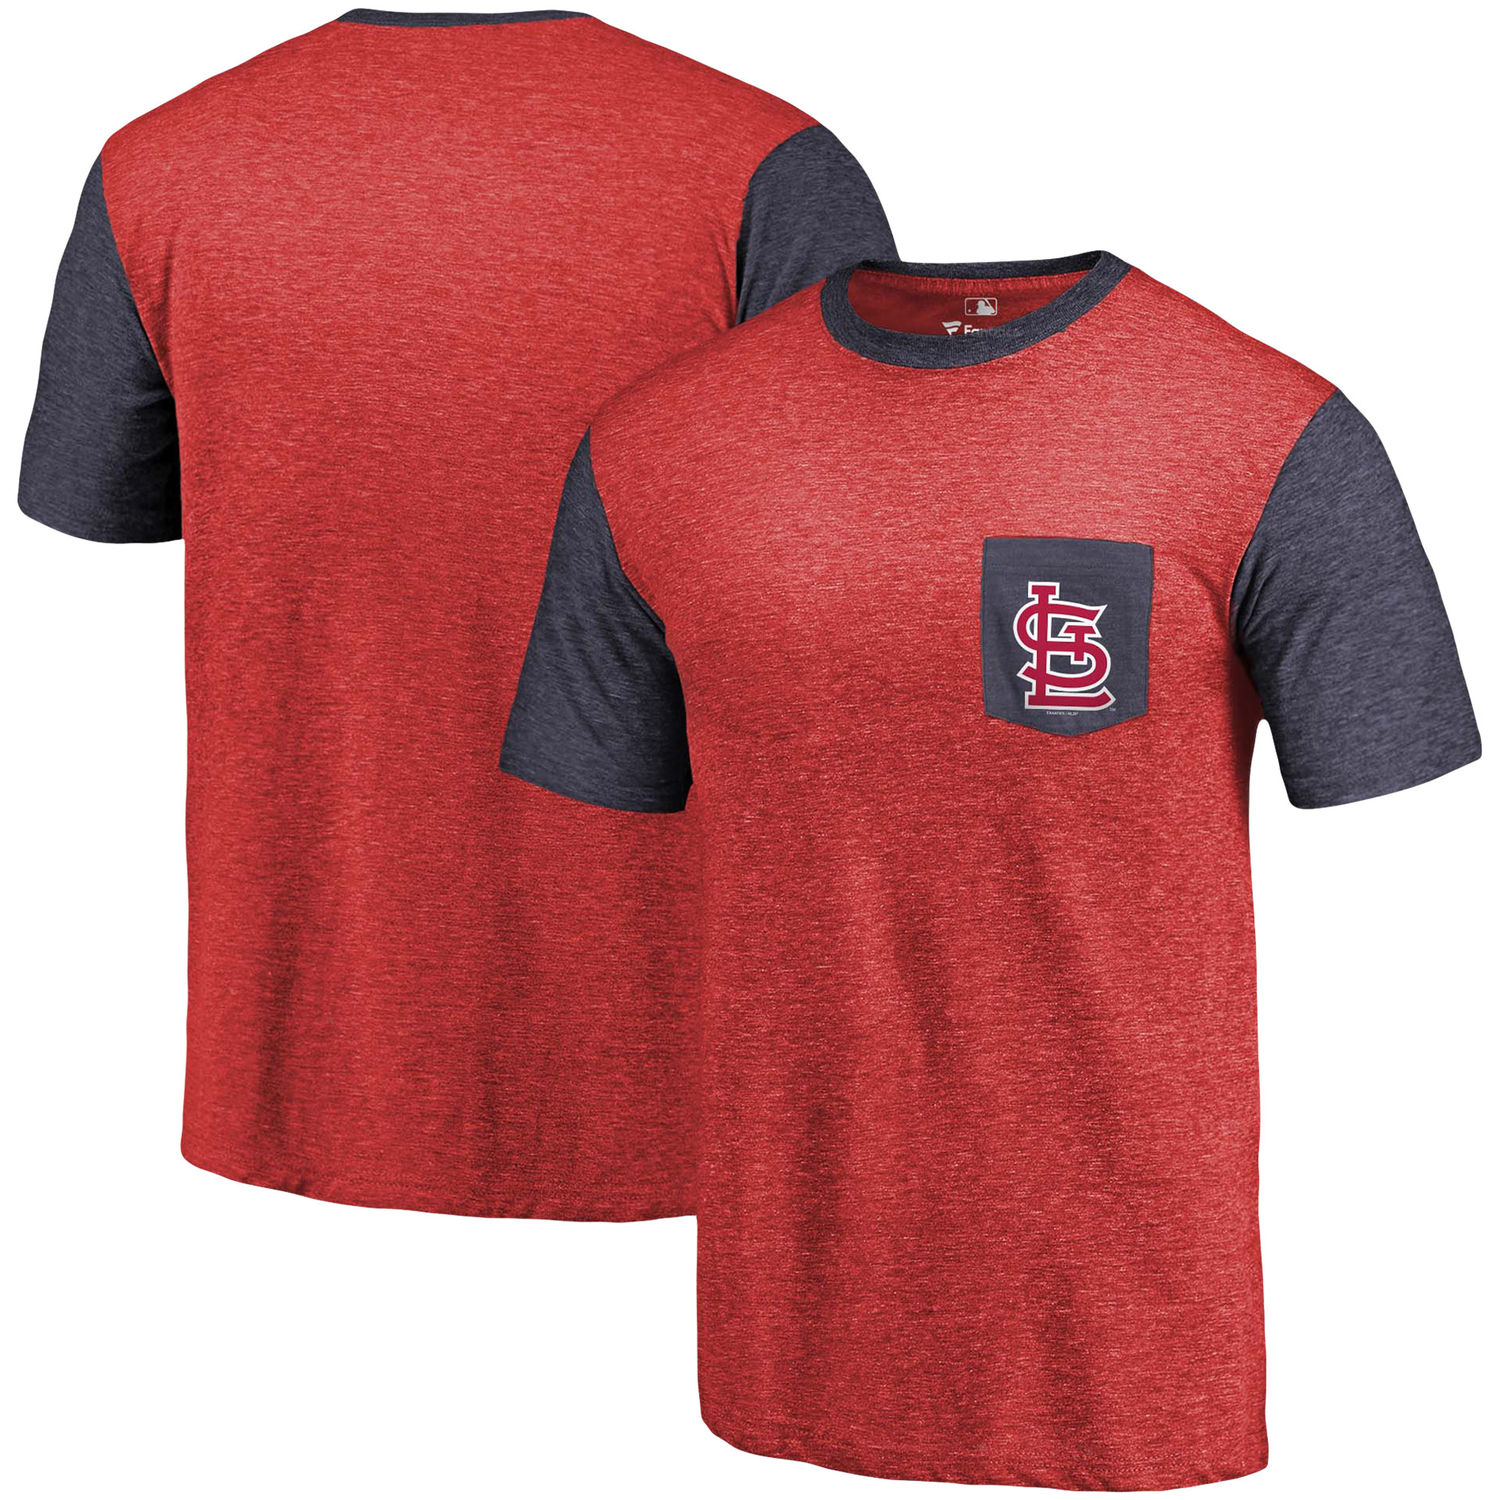 Men's St. Louis Cardinals Fanatics Branded Red-Navy Refresh Pocket T-Shirt